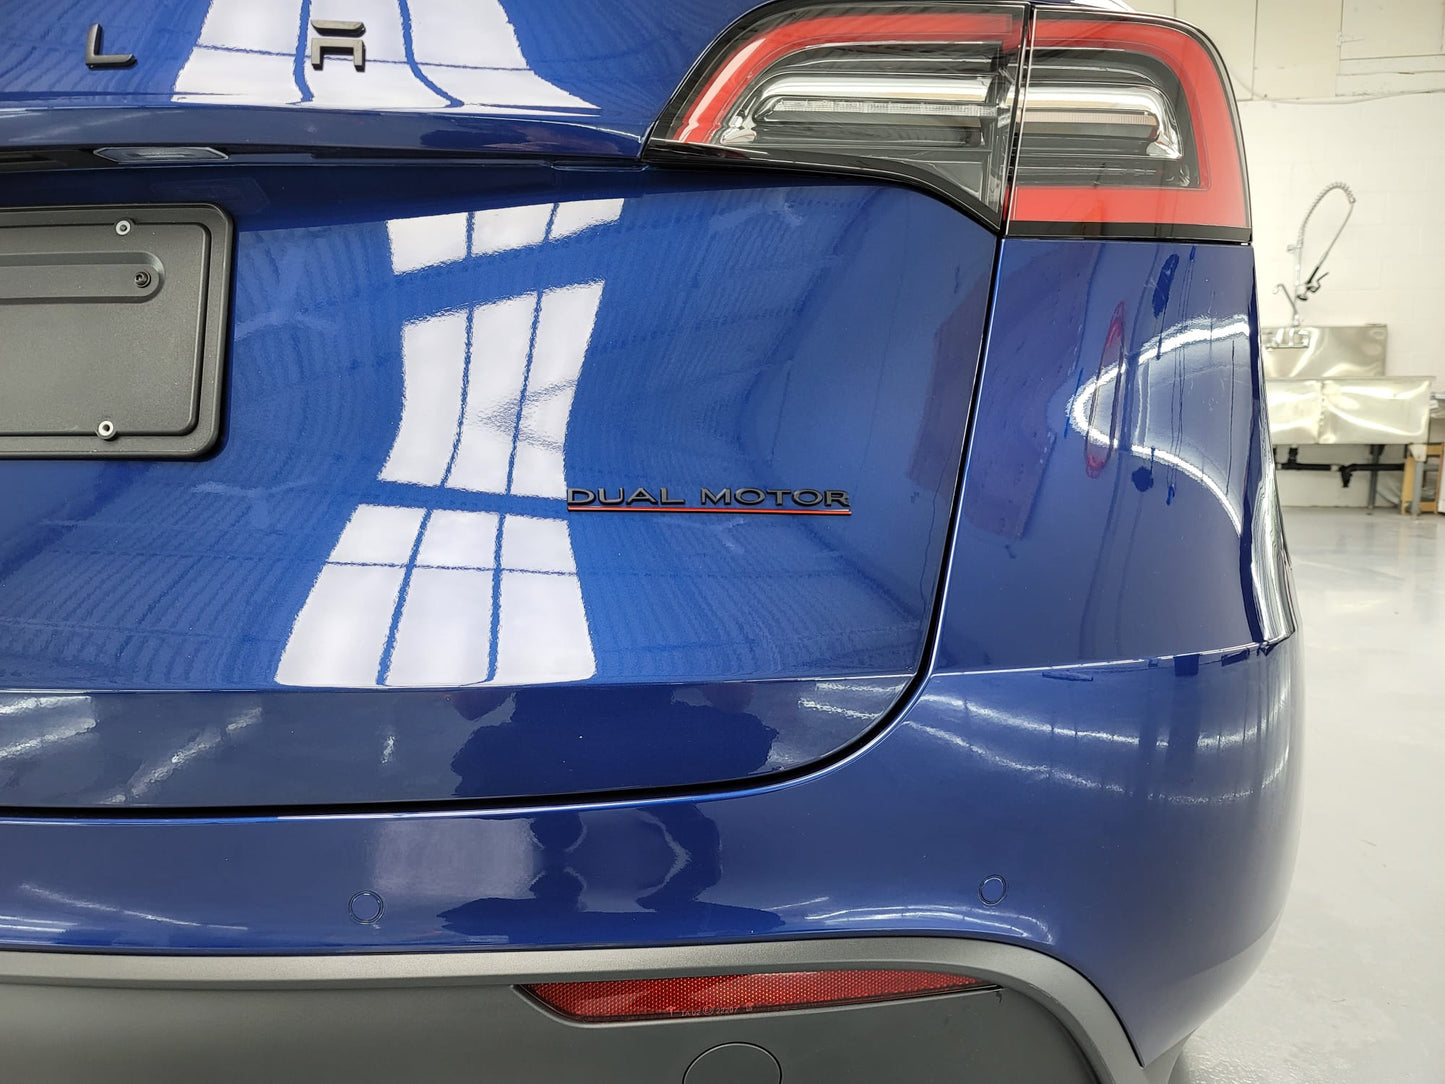 Tesla 'DUAL MOTOR' Emblem